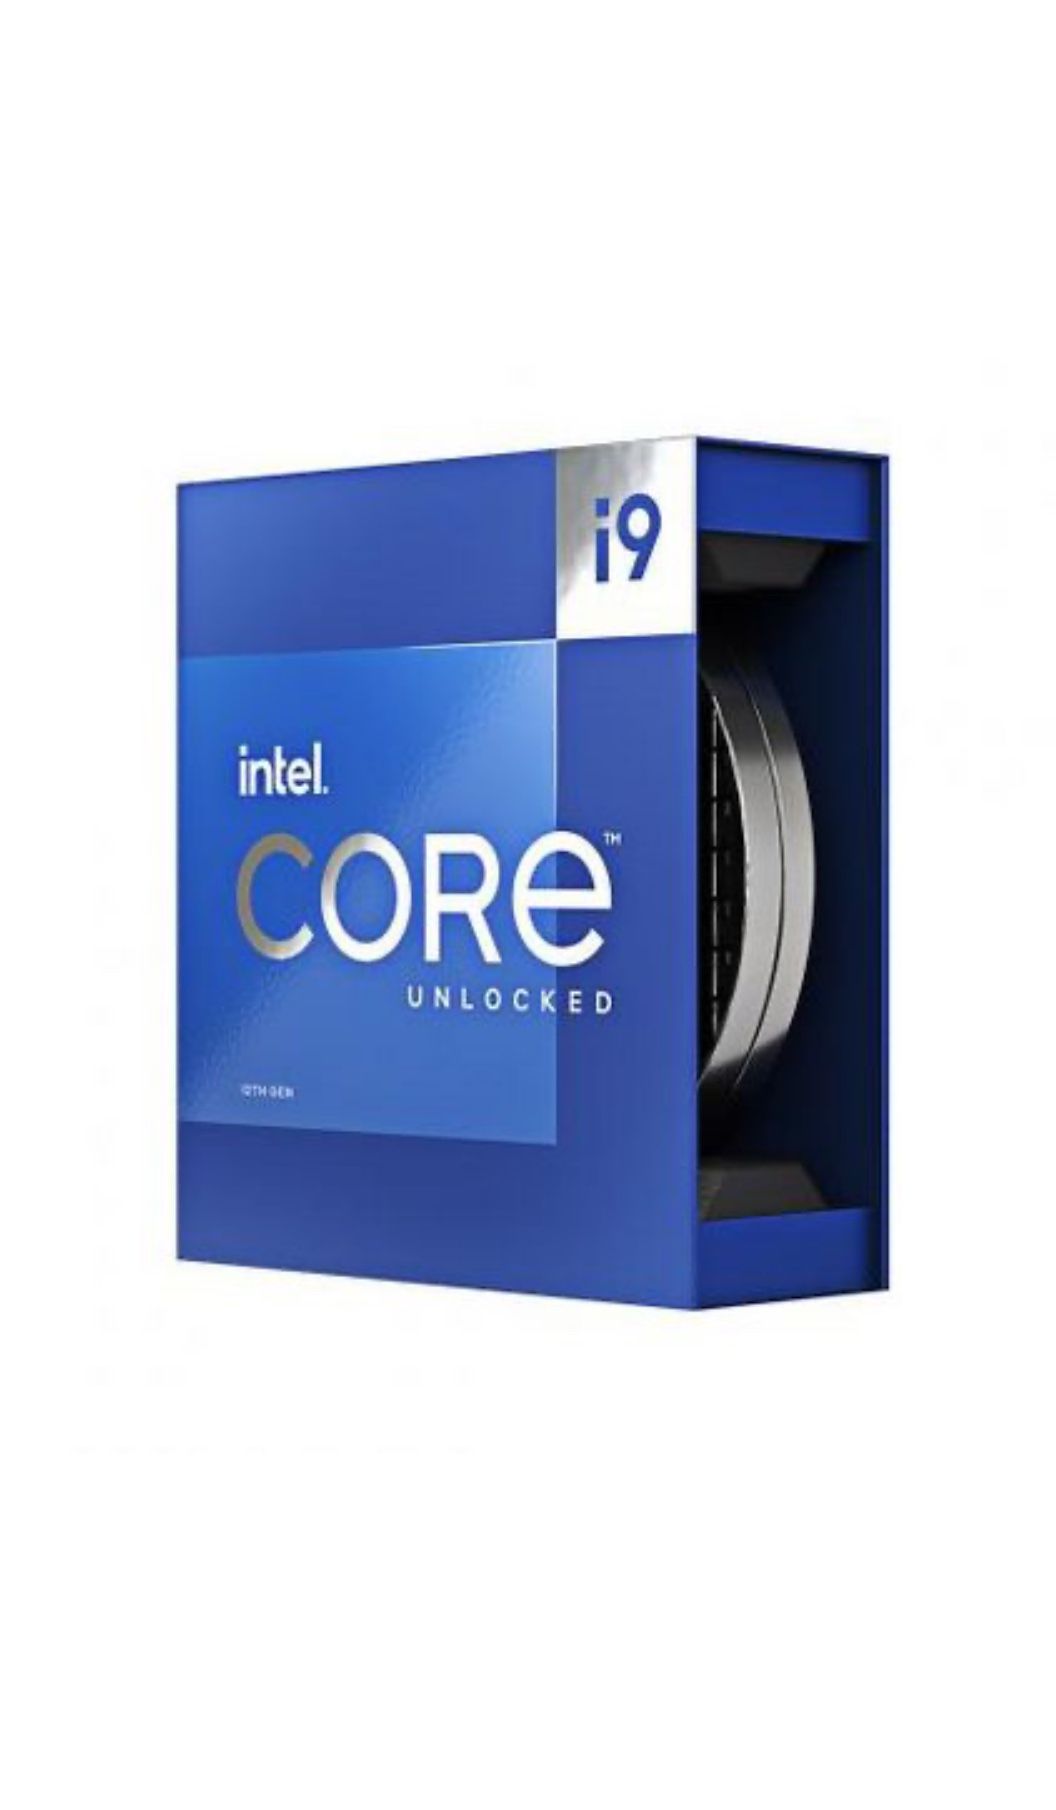 Intel Core i9-13900K Unlocked Desktop Processor - 24 cores (8P+16E) Brand New